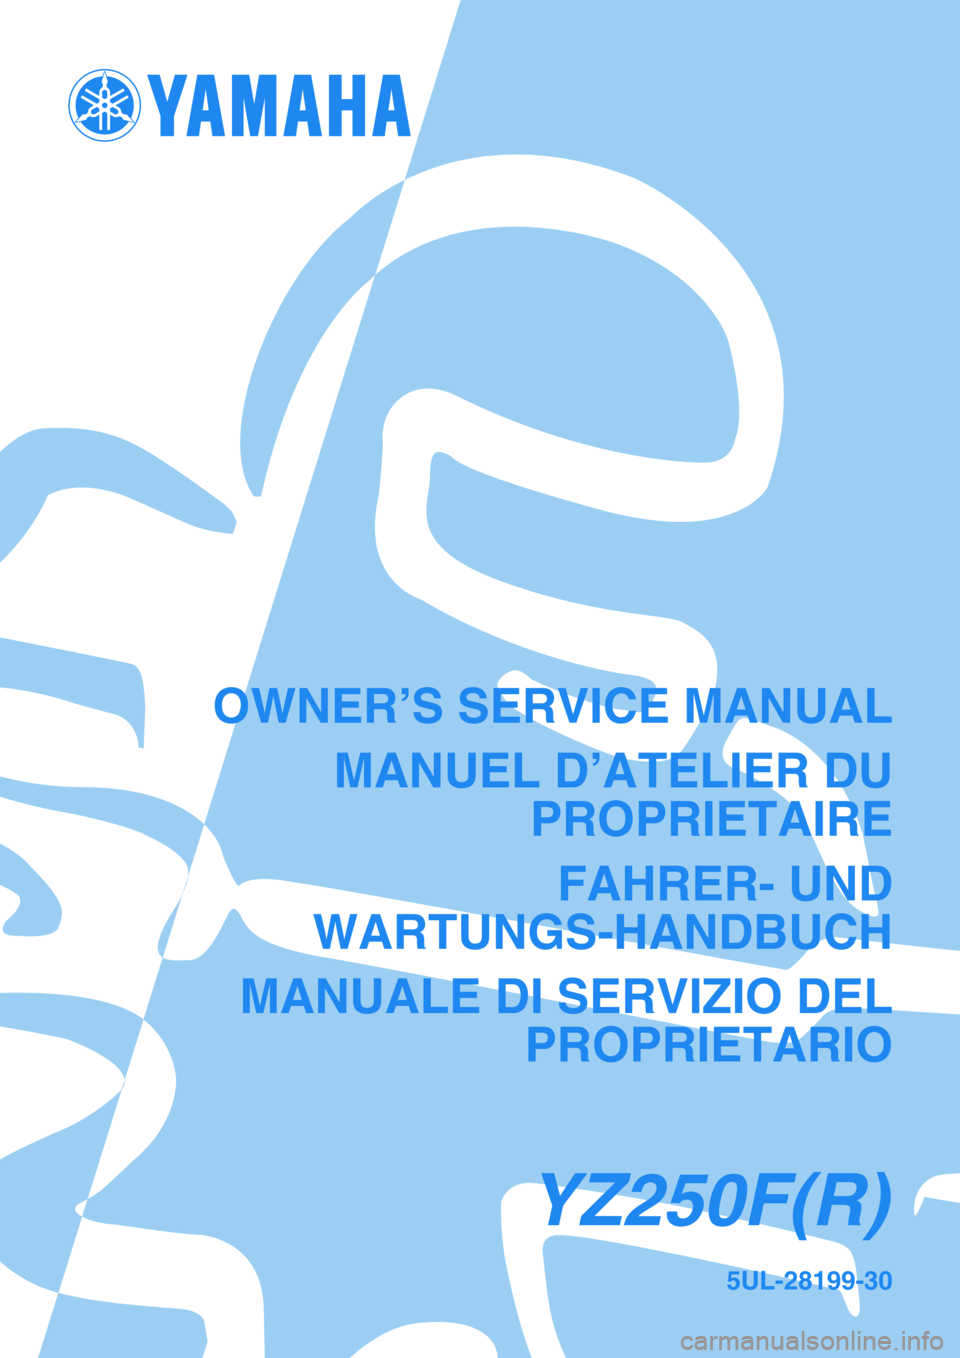 YAMAHA YZ250F 2003  Manuale duso (in Italian) 5UL-28199-30
YZ250F(R)
OWNER’S SERVICE MANUAL
MANUEL D’ATELIER DU
PROPRIETAIRE
FAHRER- UND
WARTUNGS-HANDBUCH
MANUALE DI SERVIZIO DEL
PROPRIETARIO 